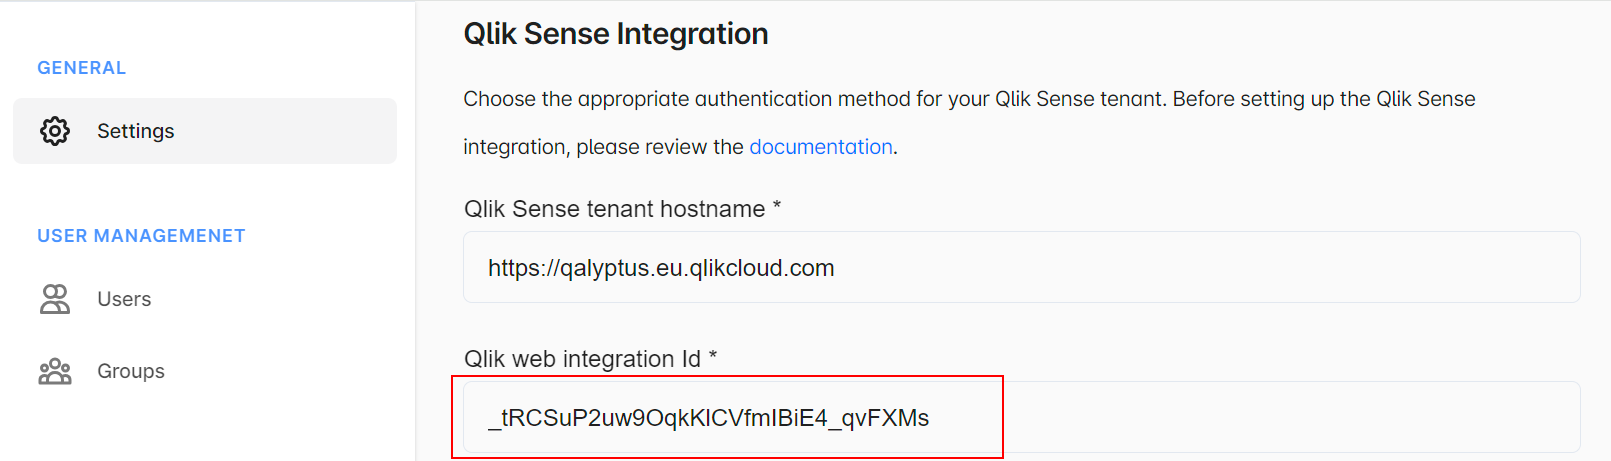 Qalyptus Cloud - Add Web Integration Id